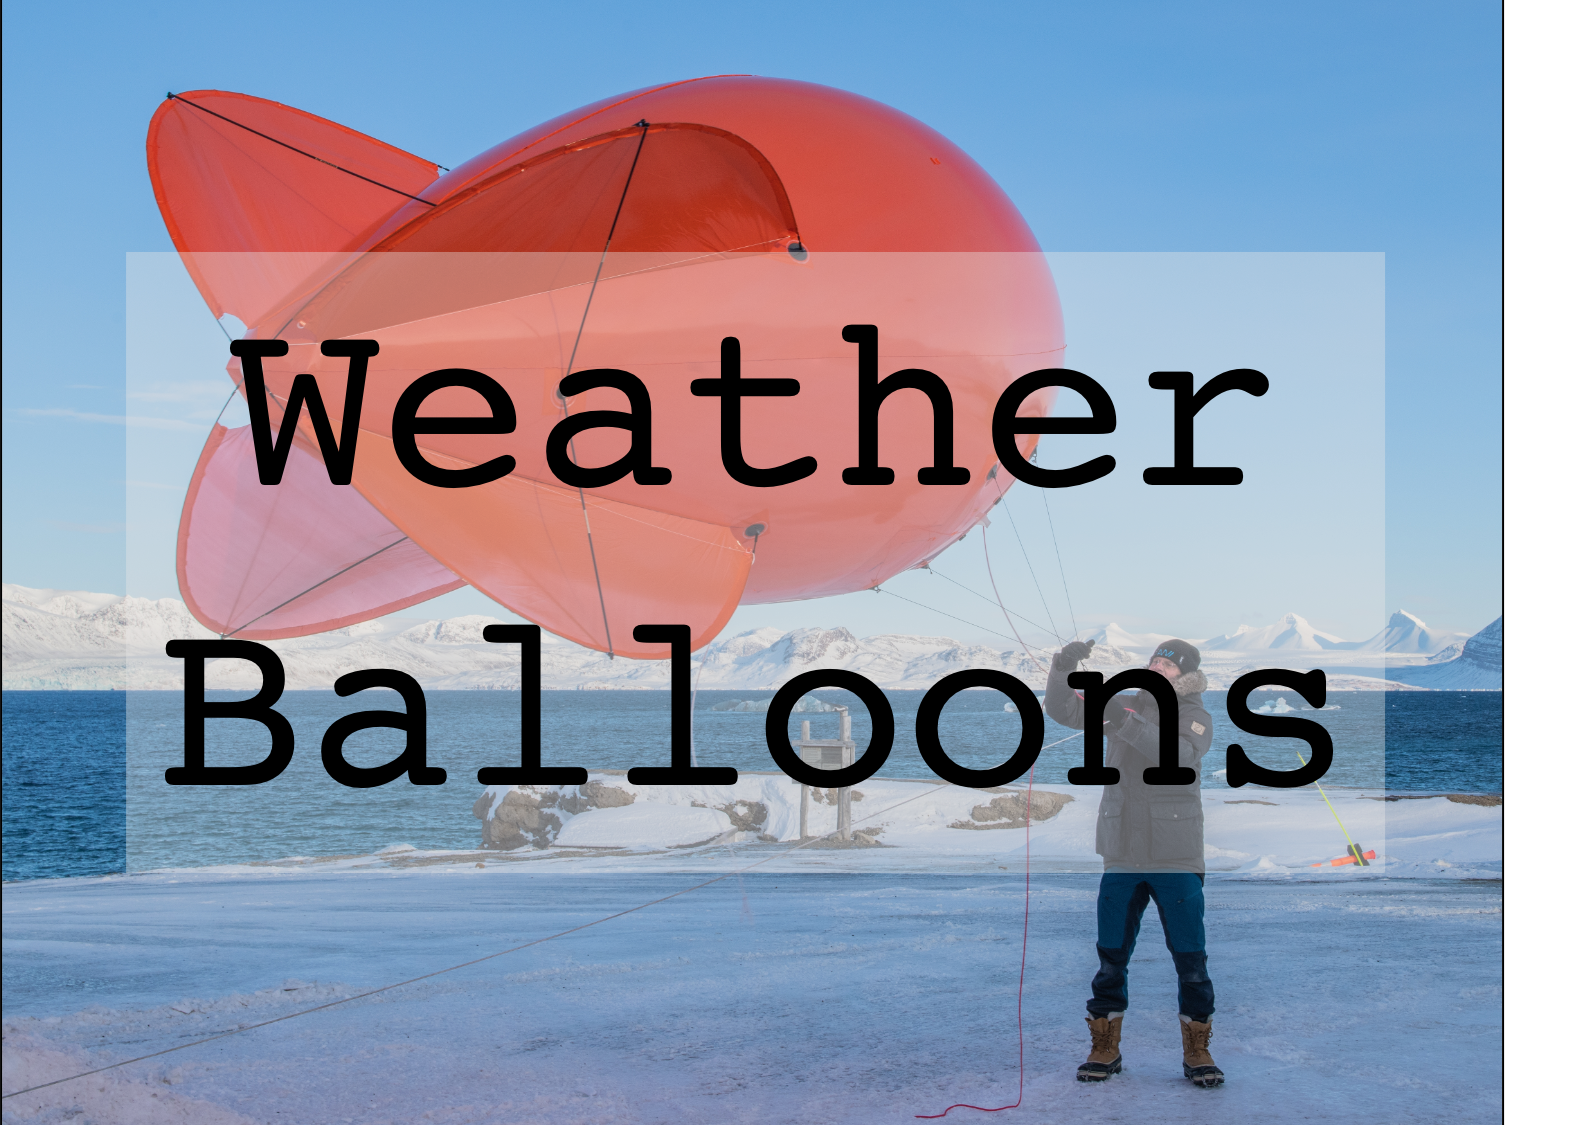 Weather balloons